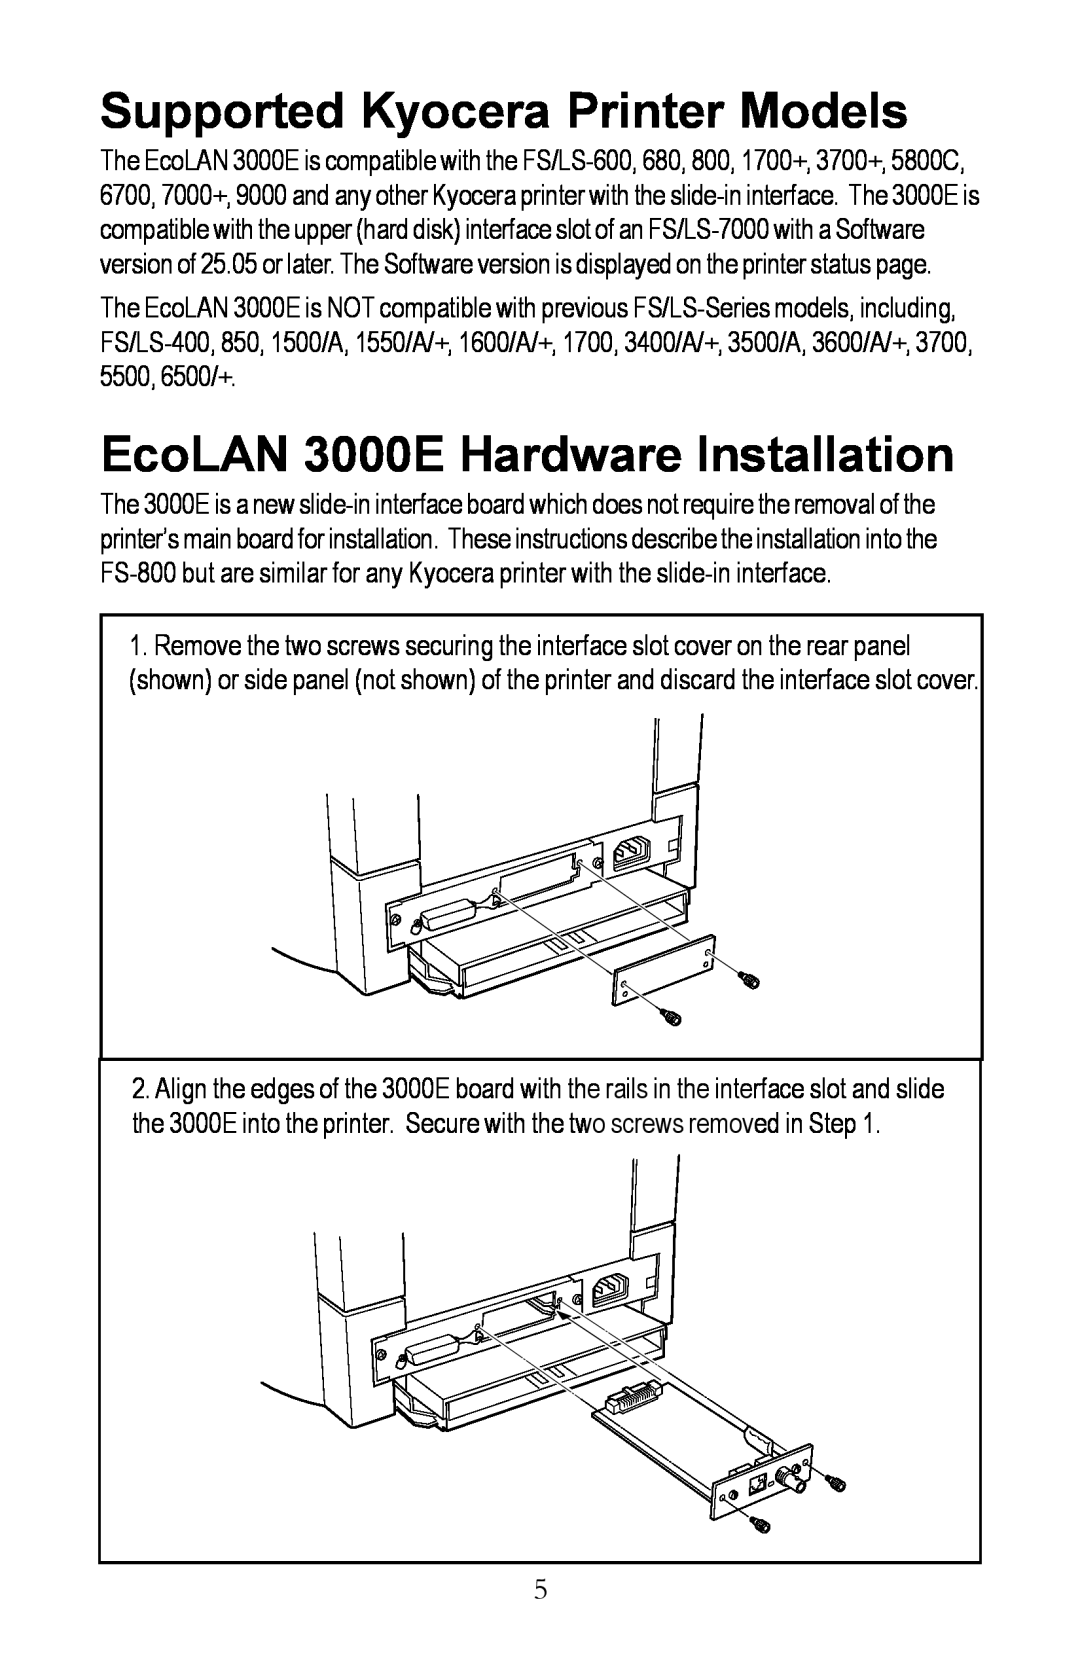 Kyocera manual Supported Kyocera Printer Models, EcoLAN 3000E Hardware Installation 